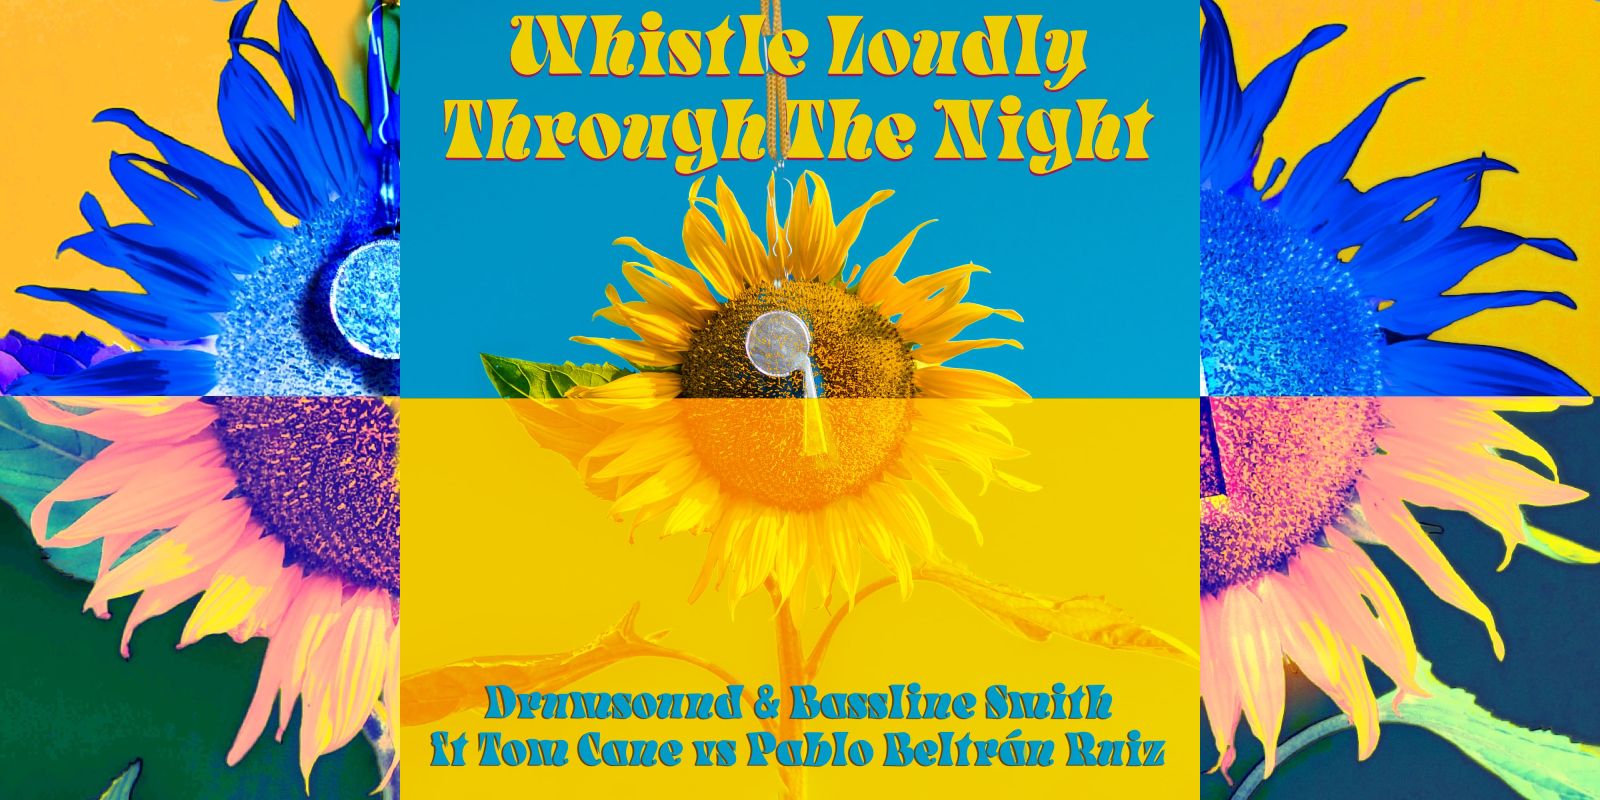 Whistle Loudly/Quietly Through The Night (Drumsound & Bassline Smith  vs Pablo Beltrán Ruiz) – WINNER!